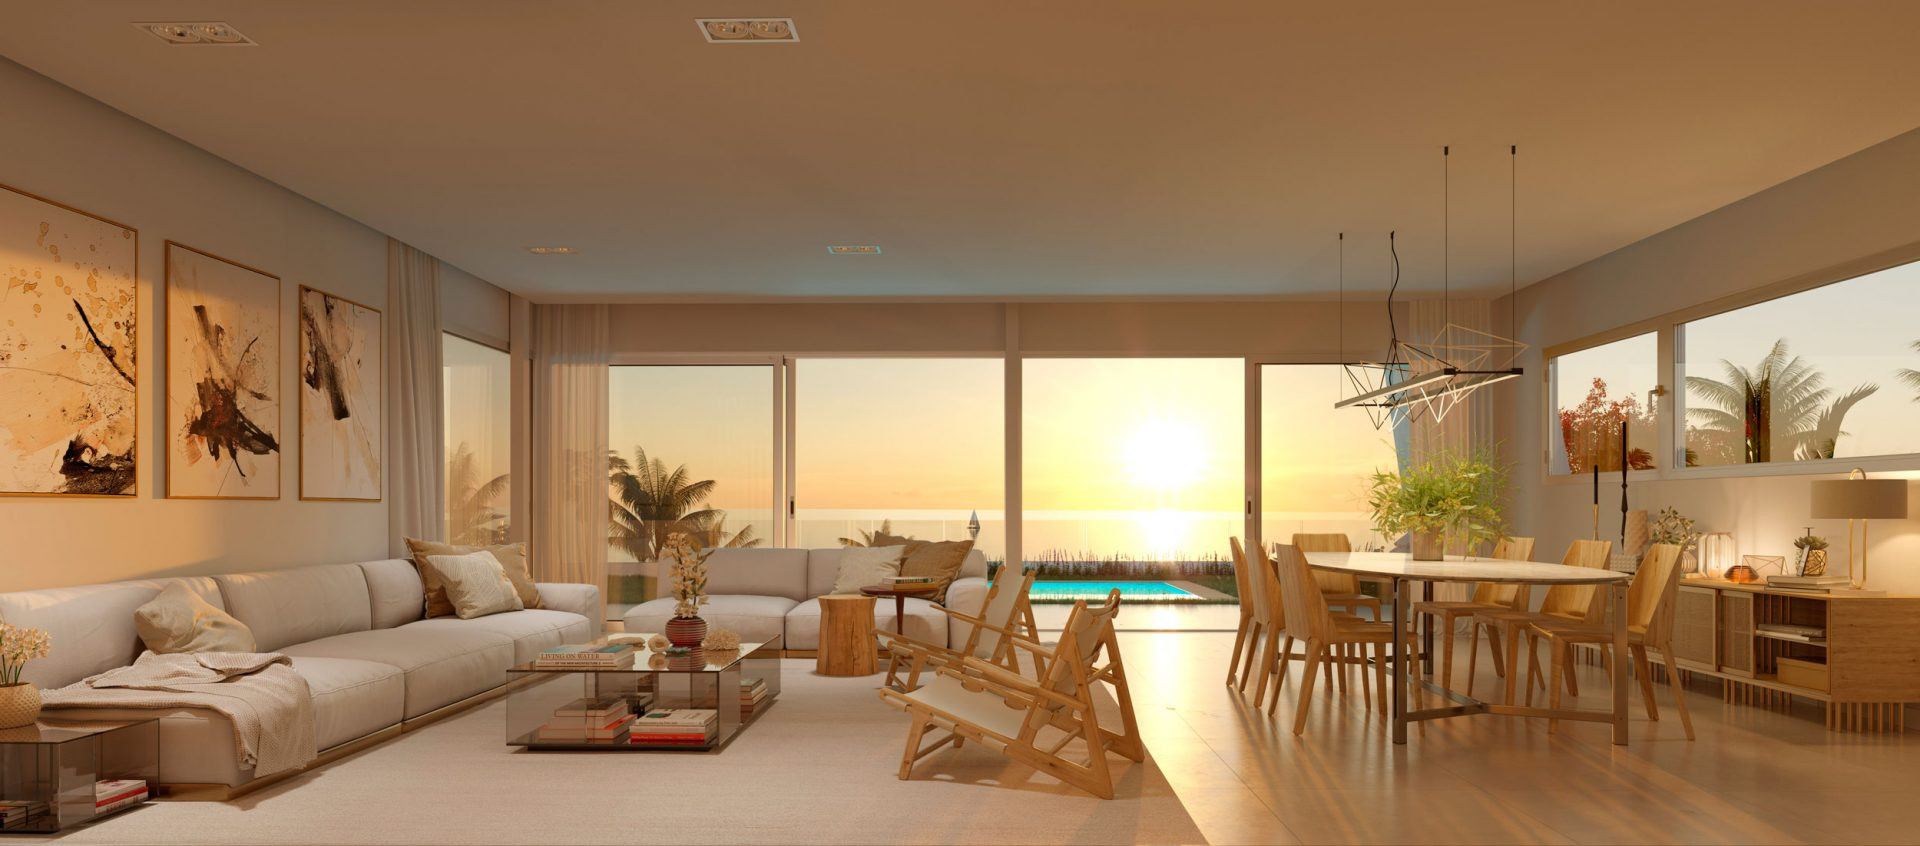 Exclusive 3-bedroom semi-detached house with avant-garde design and impressive sea views in Mijas Costa. | Image 8